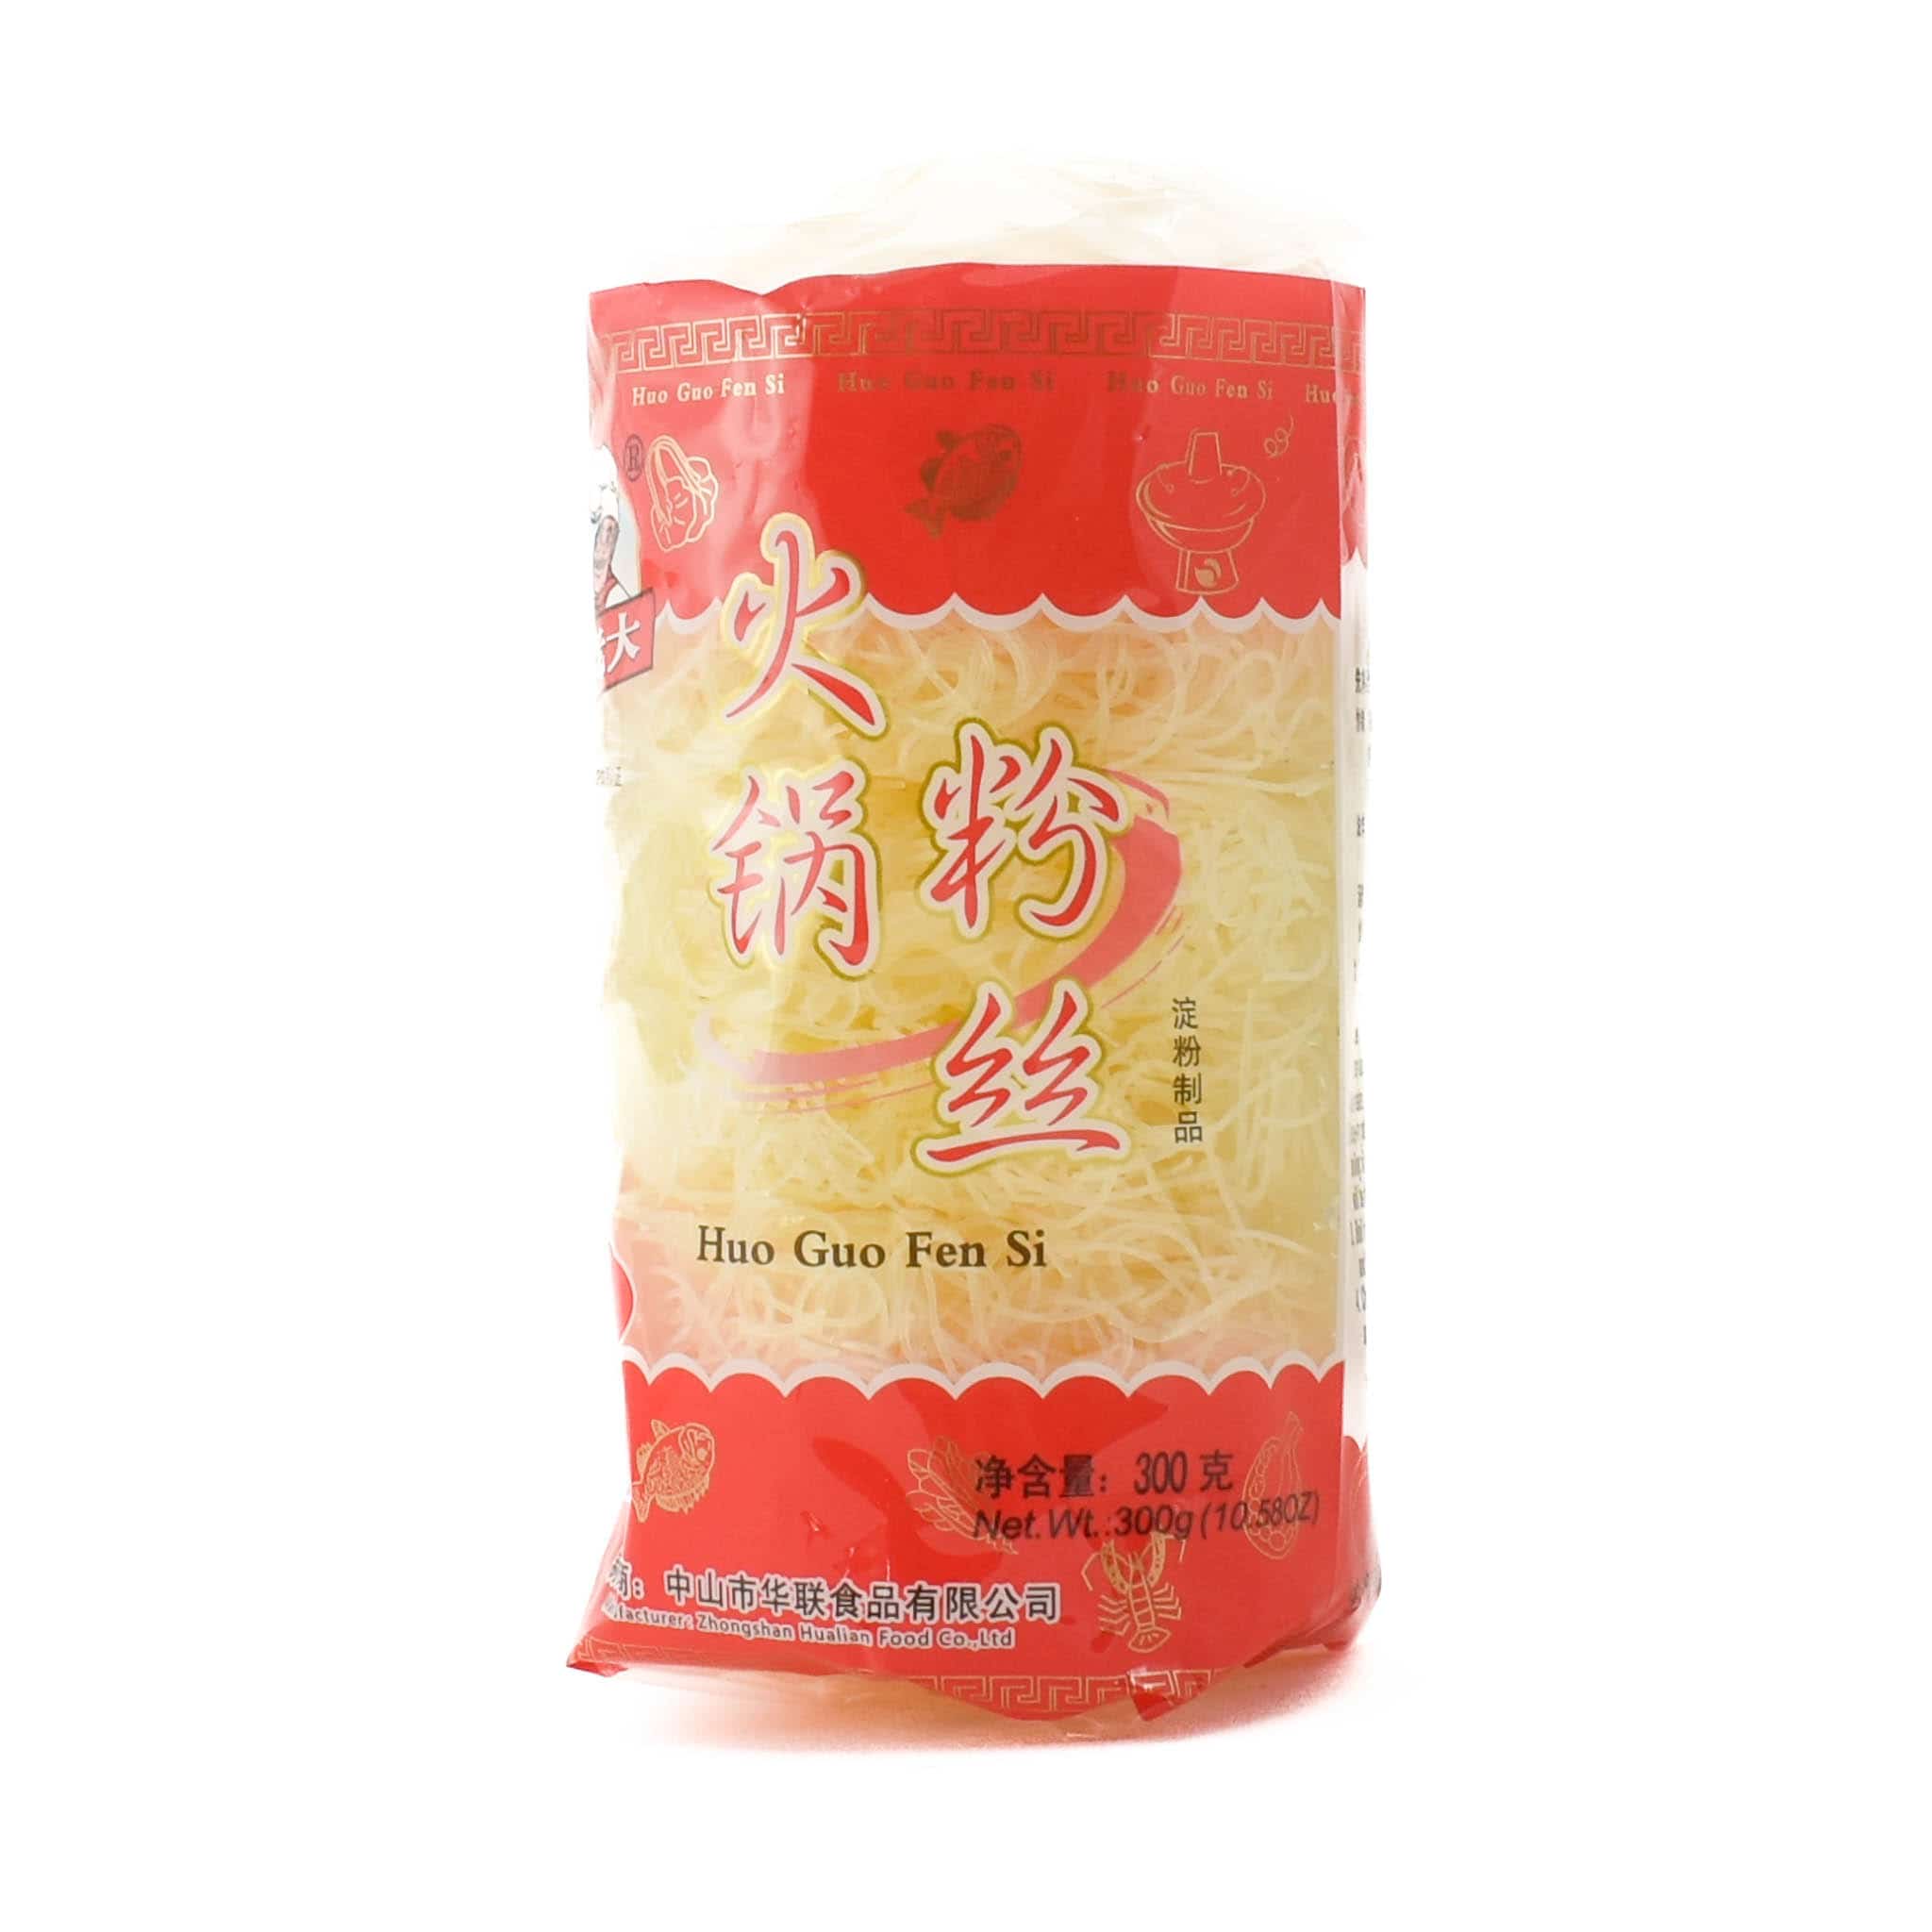 Shirataki Konjac Flat Noodles 380g (Pack of 4) | Pasta Alternative